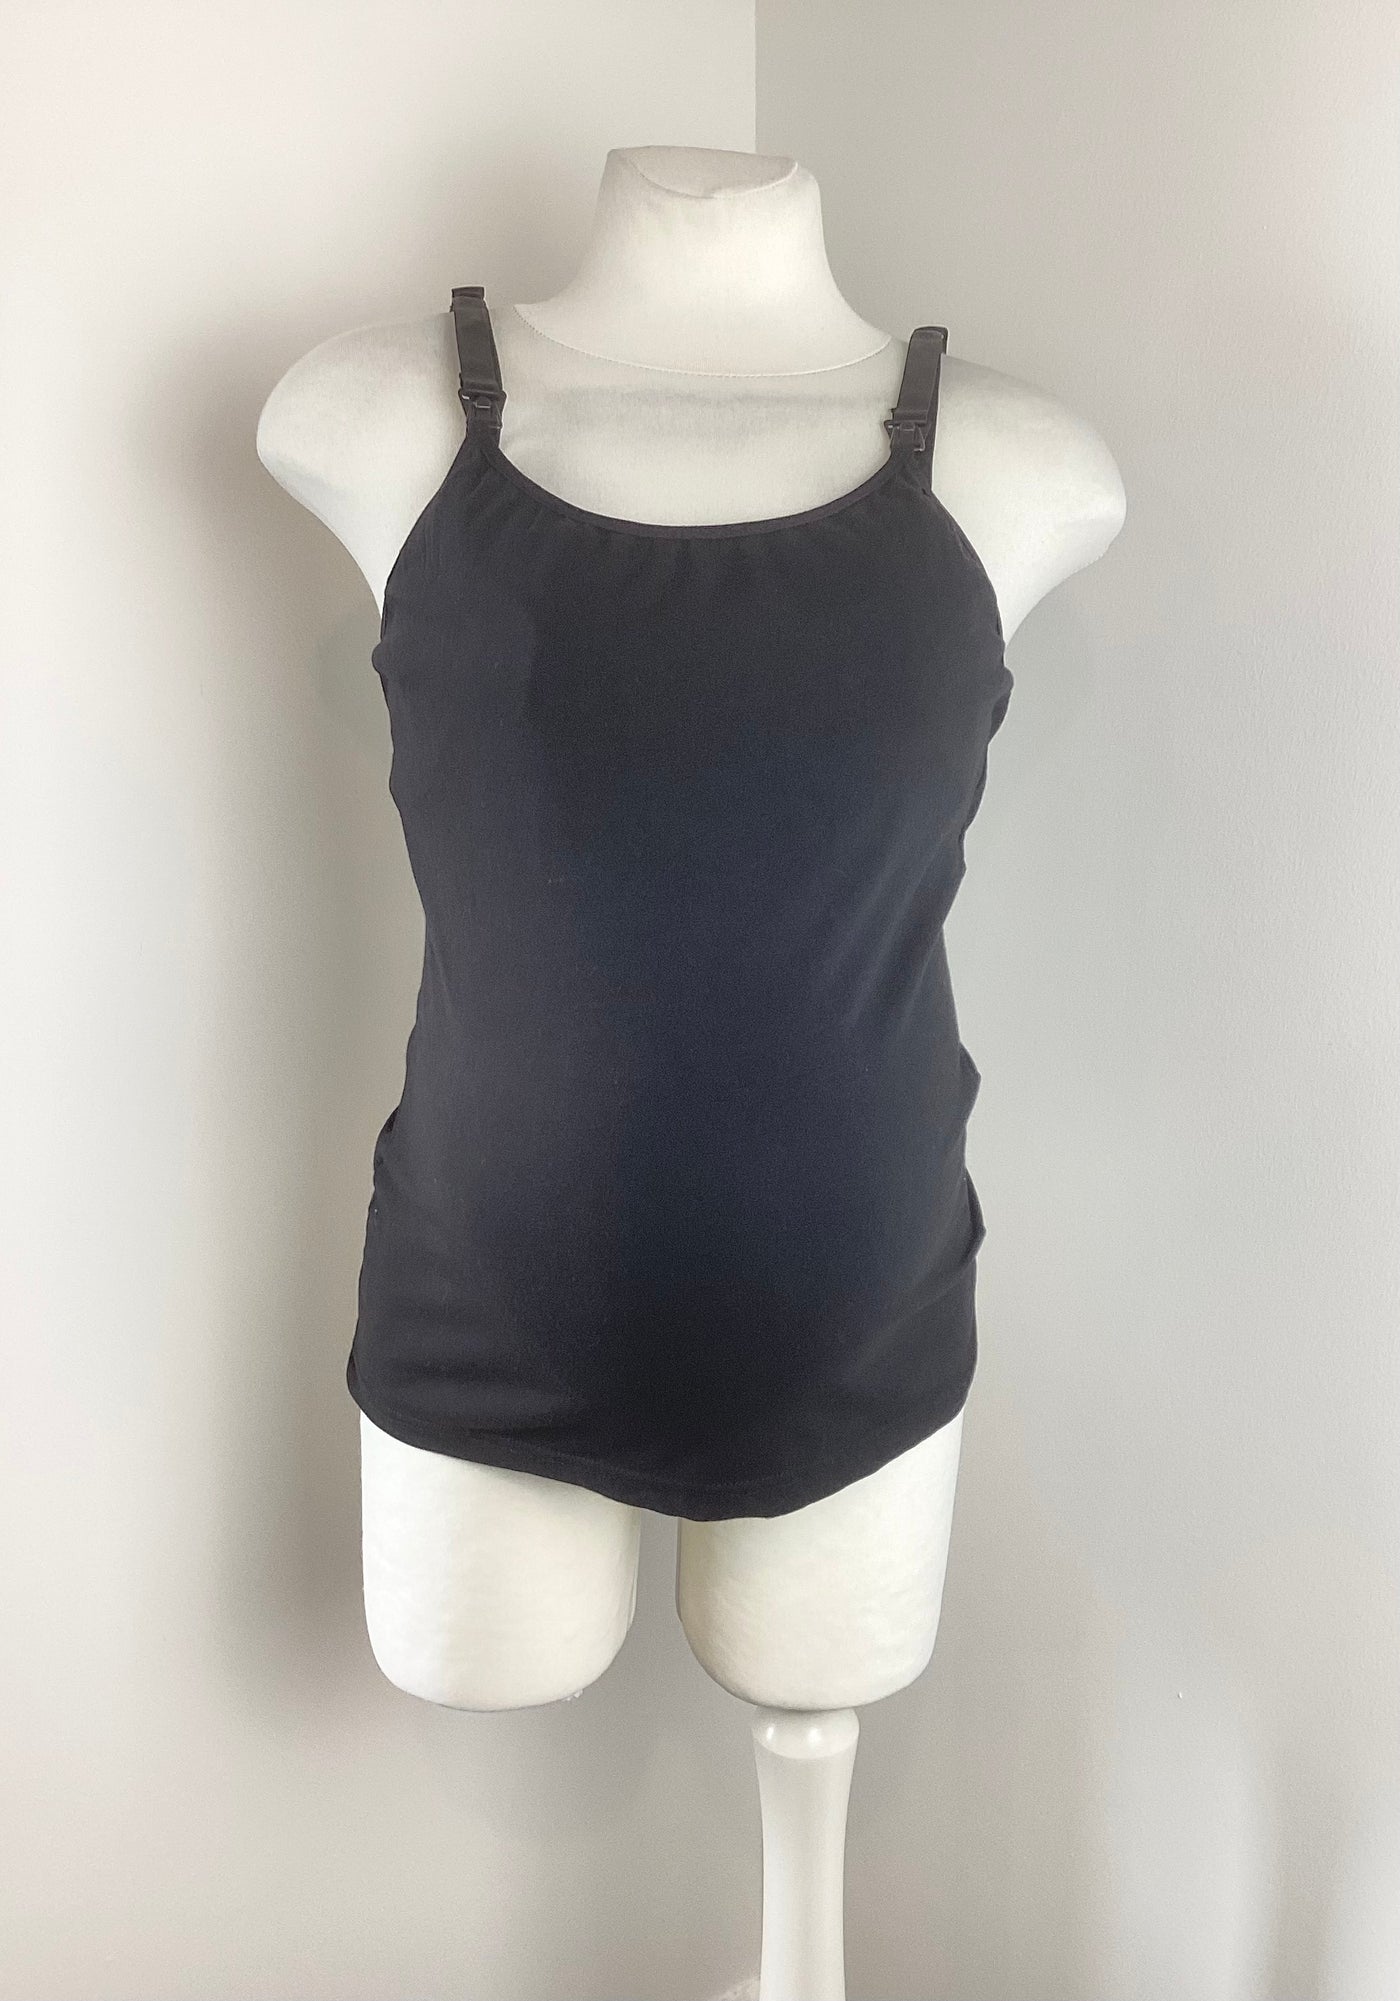 Black camisole nursing top (no label) - Size 16 (more like size 12/14)